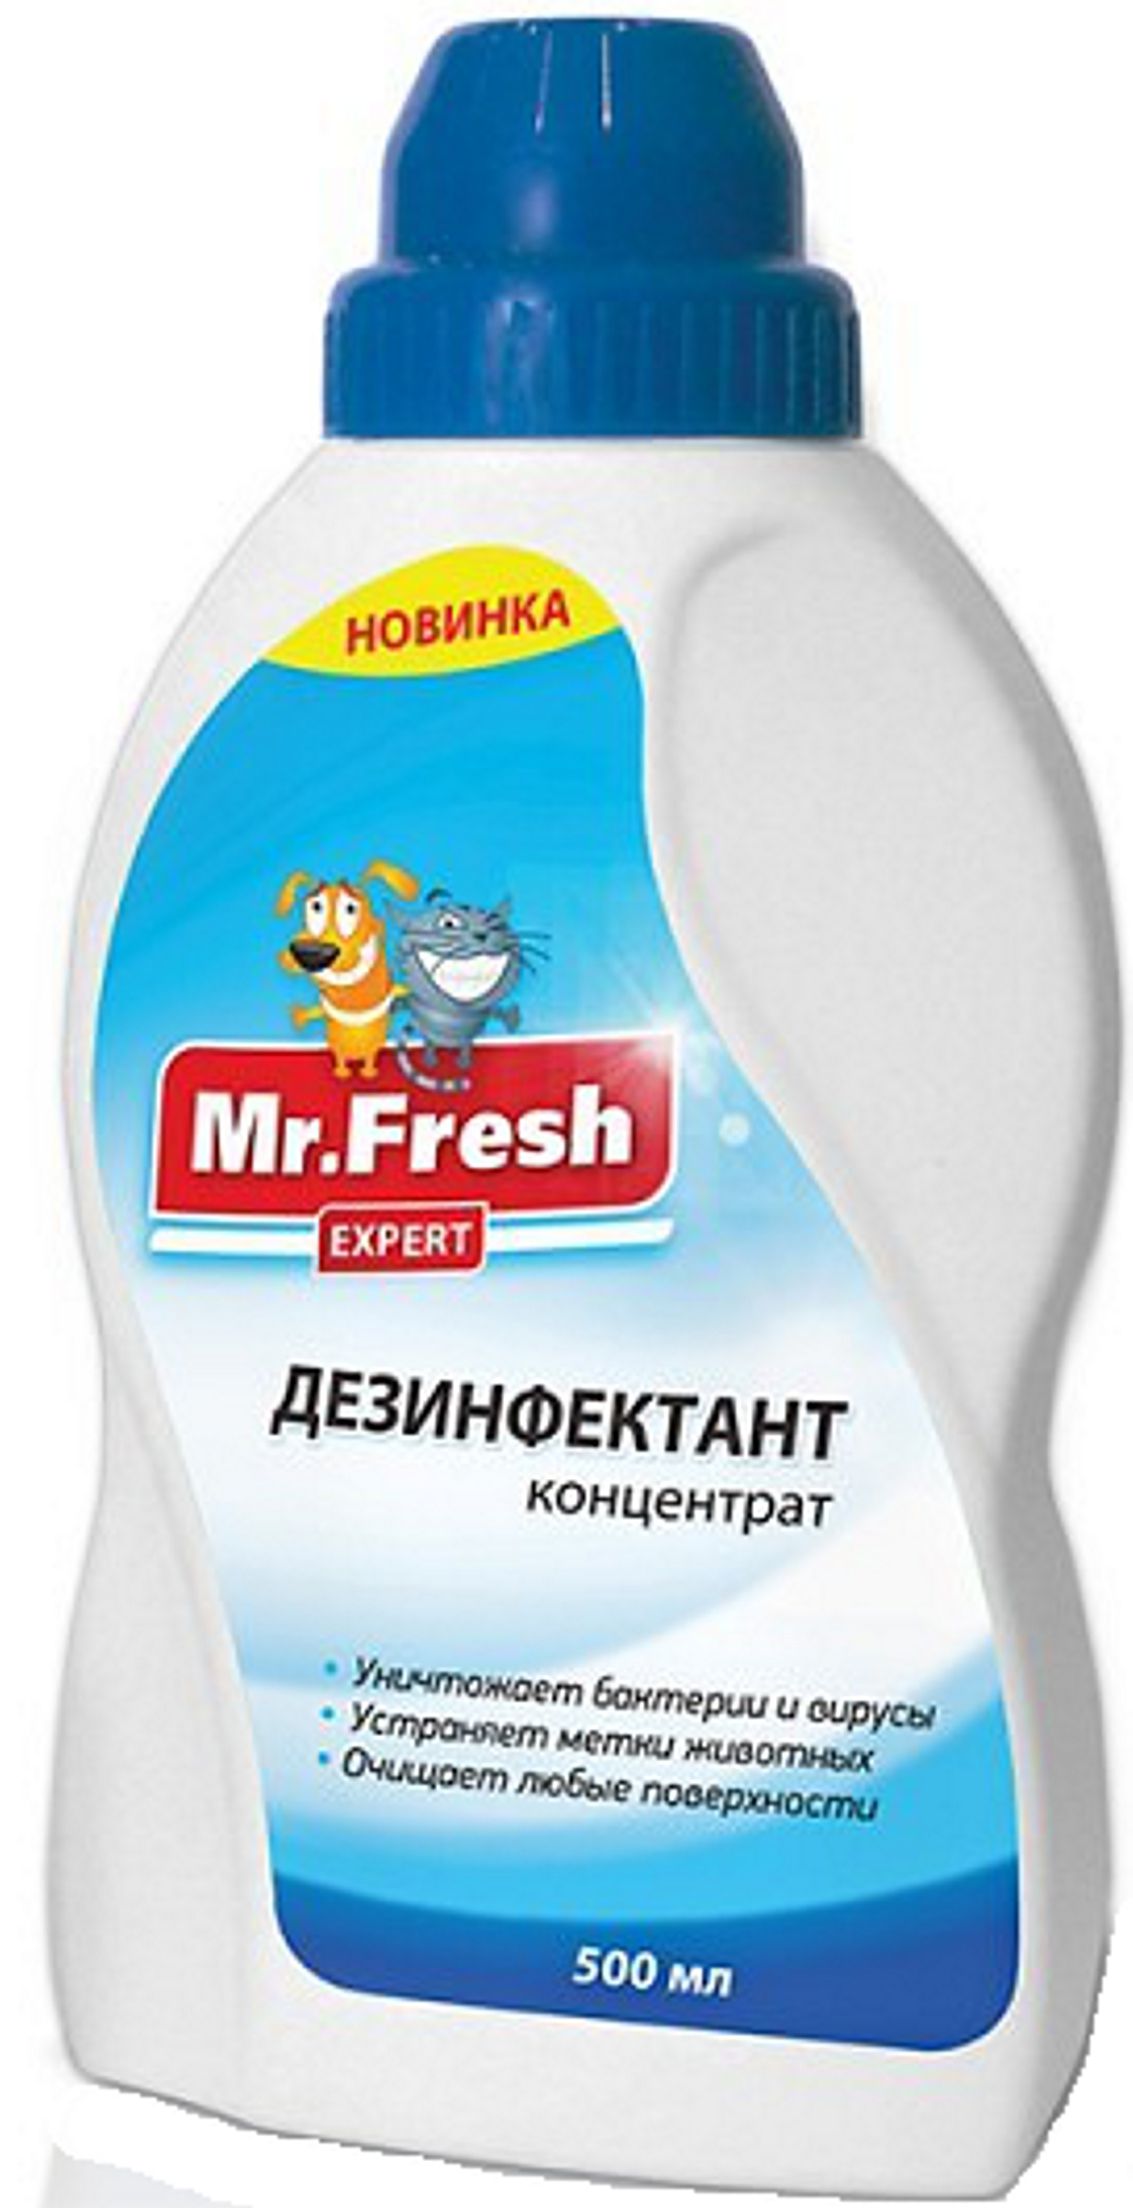 Mr. Fresh Expert Дезинфектант для обраб помещений 500 мл 1